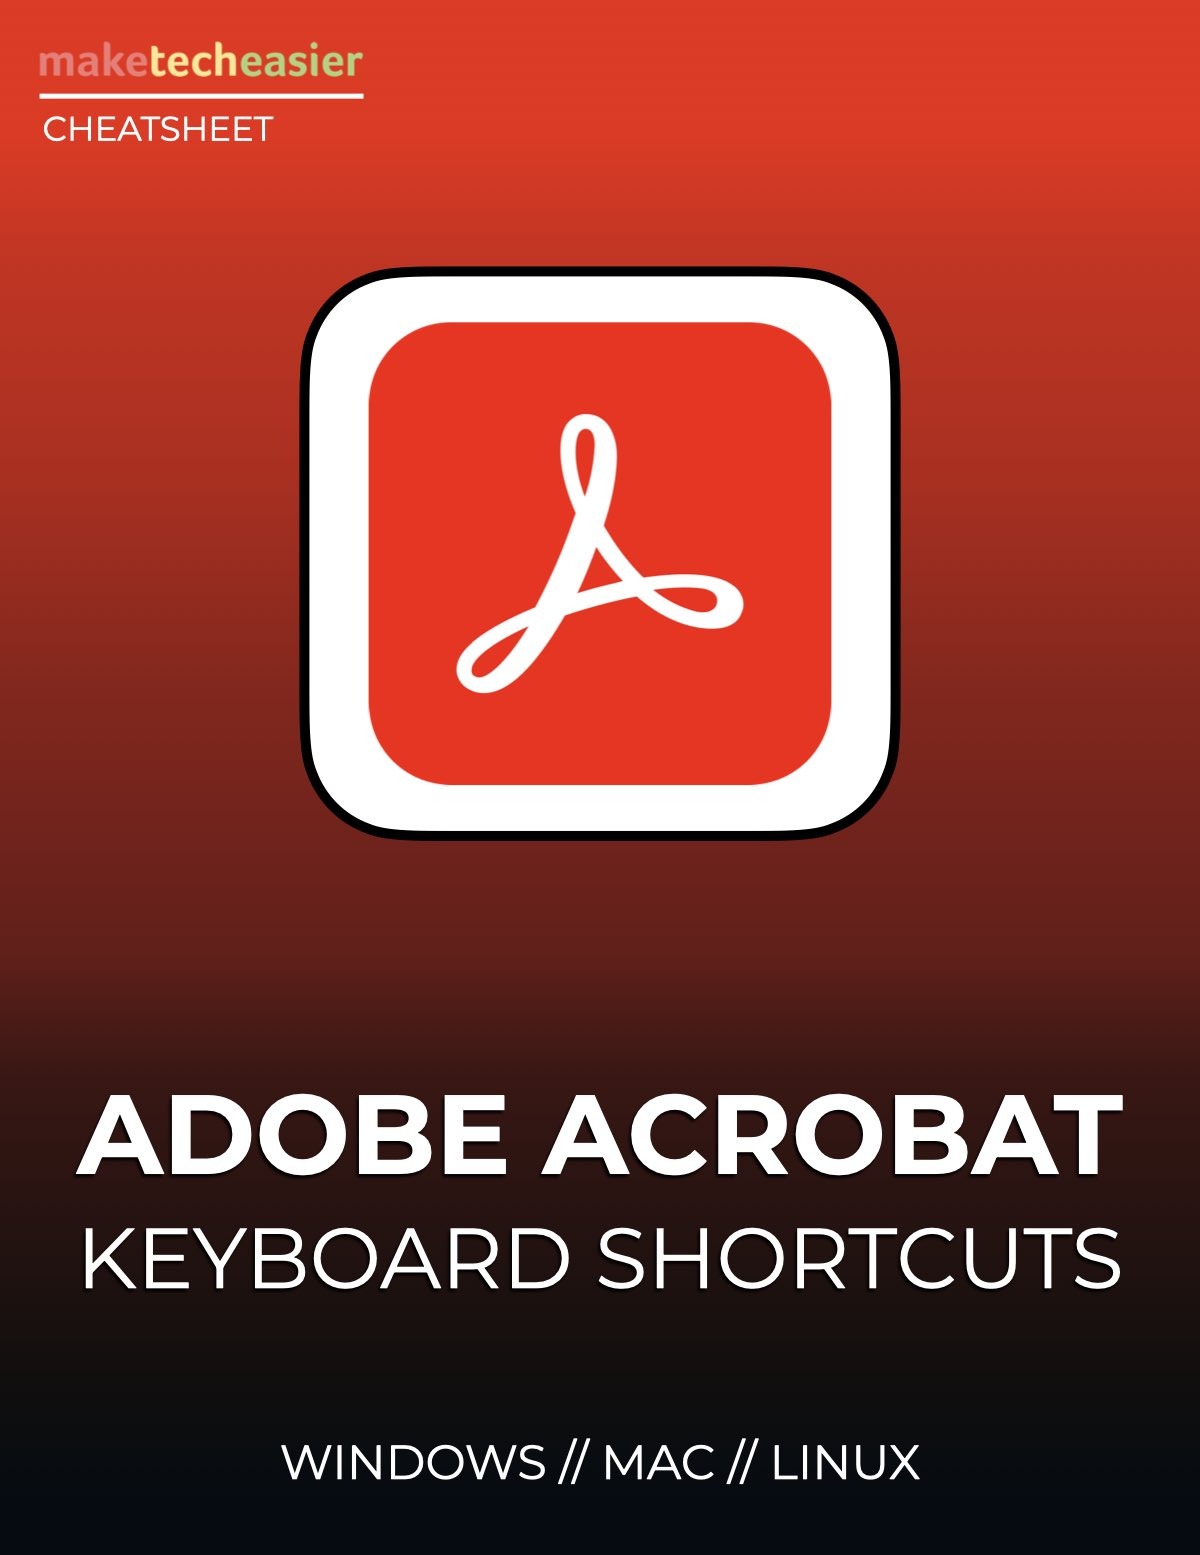 Adobe Acrobat Keyboard Shortcuts